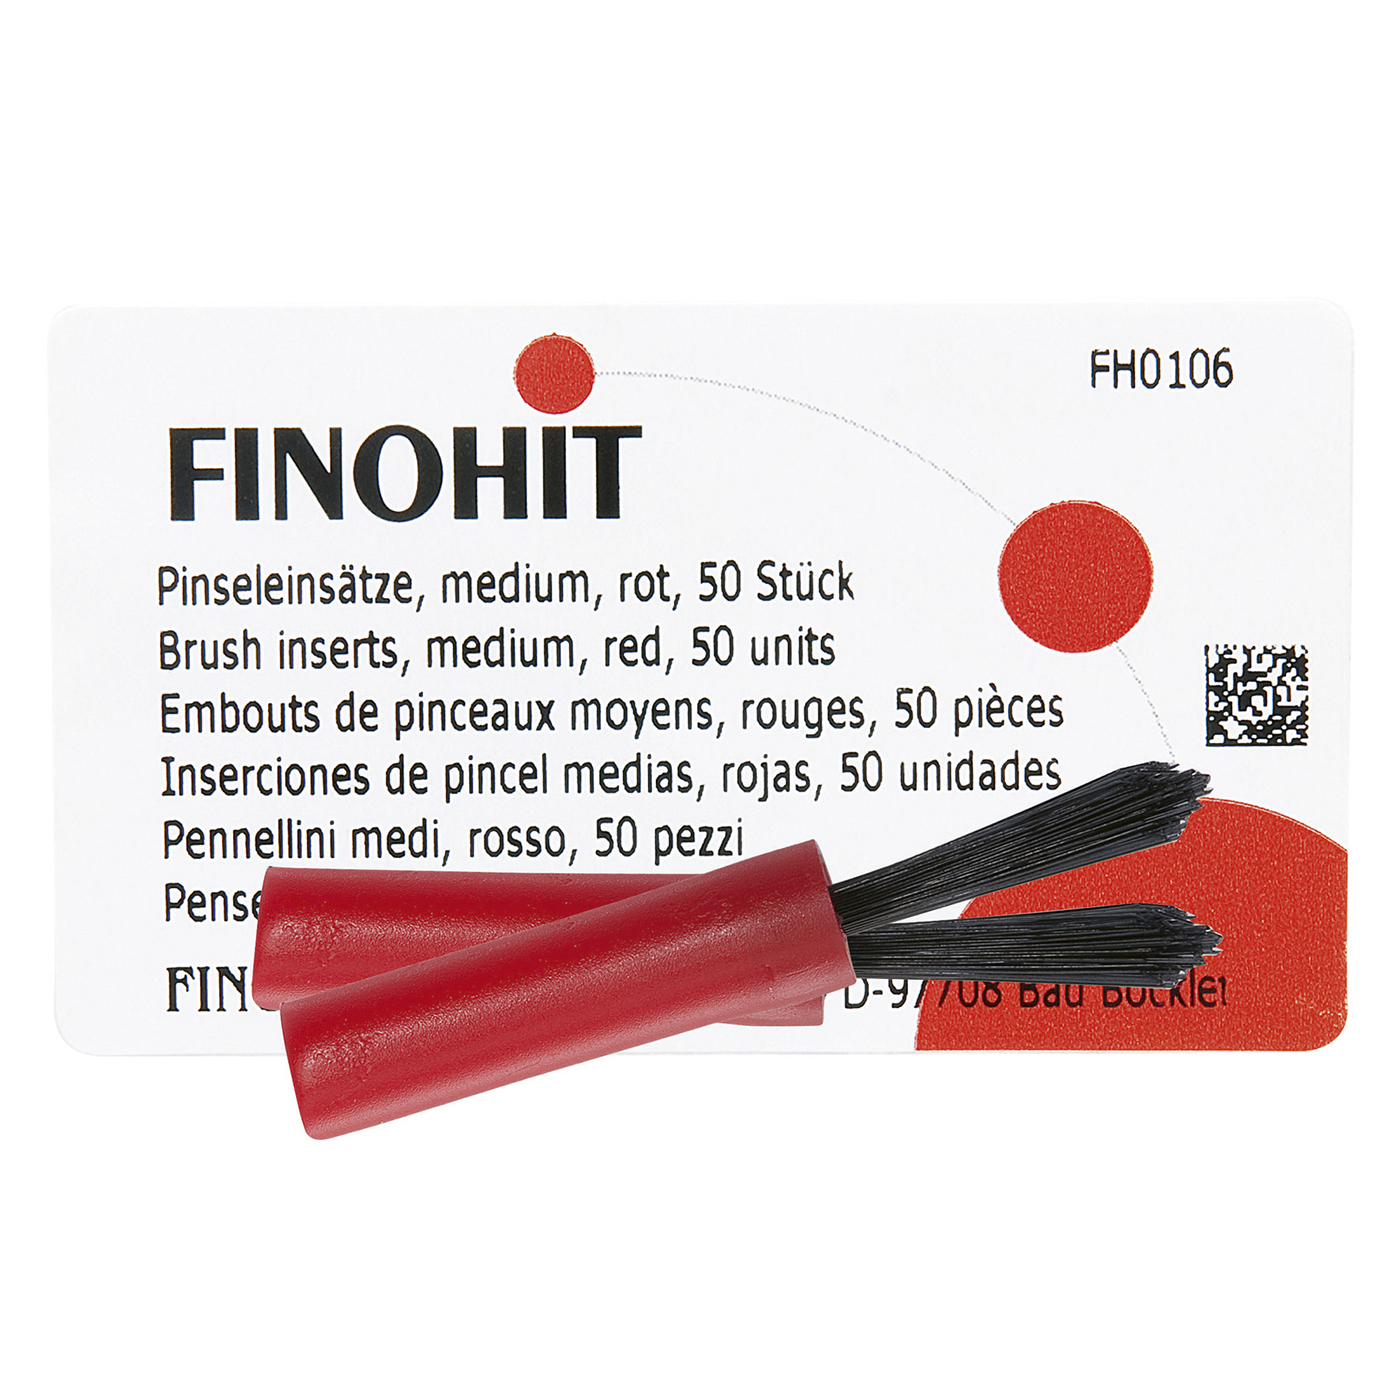 FINOHIT Pinseleinsätze, medium, rot - 50 Stück